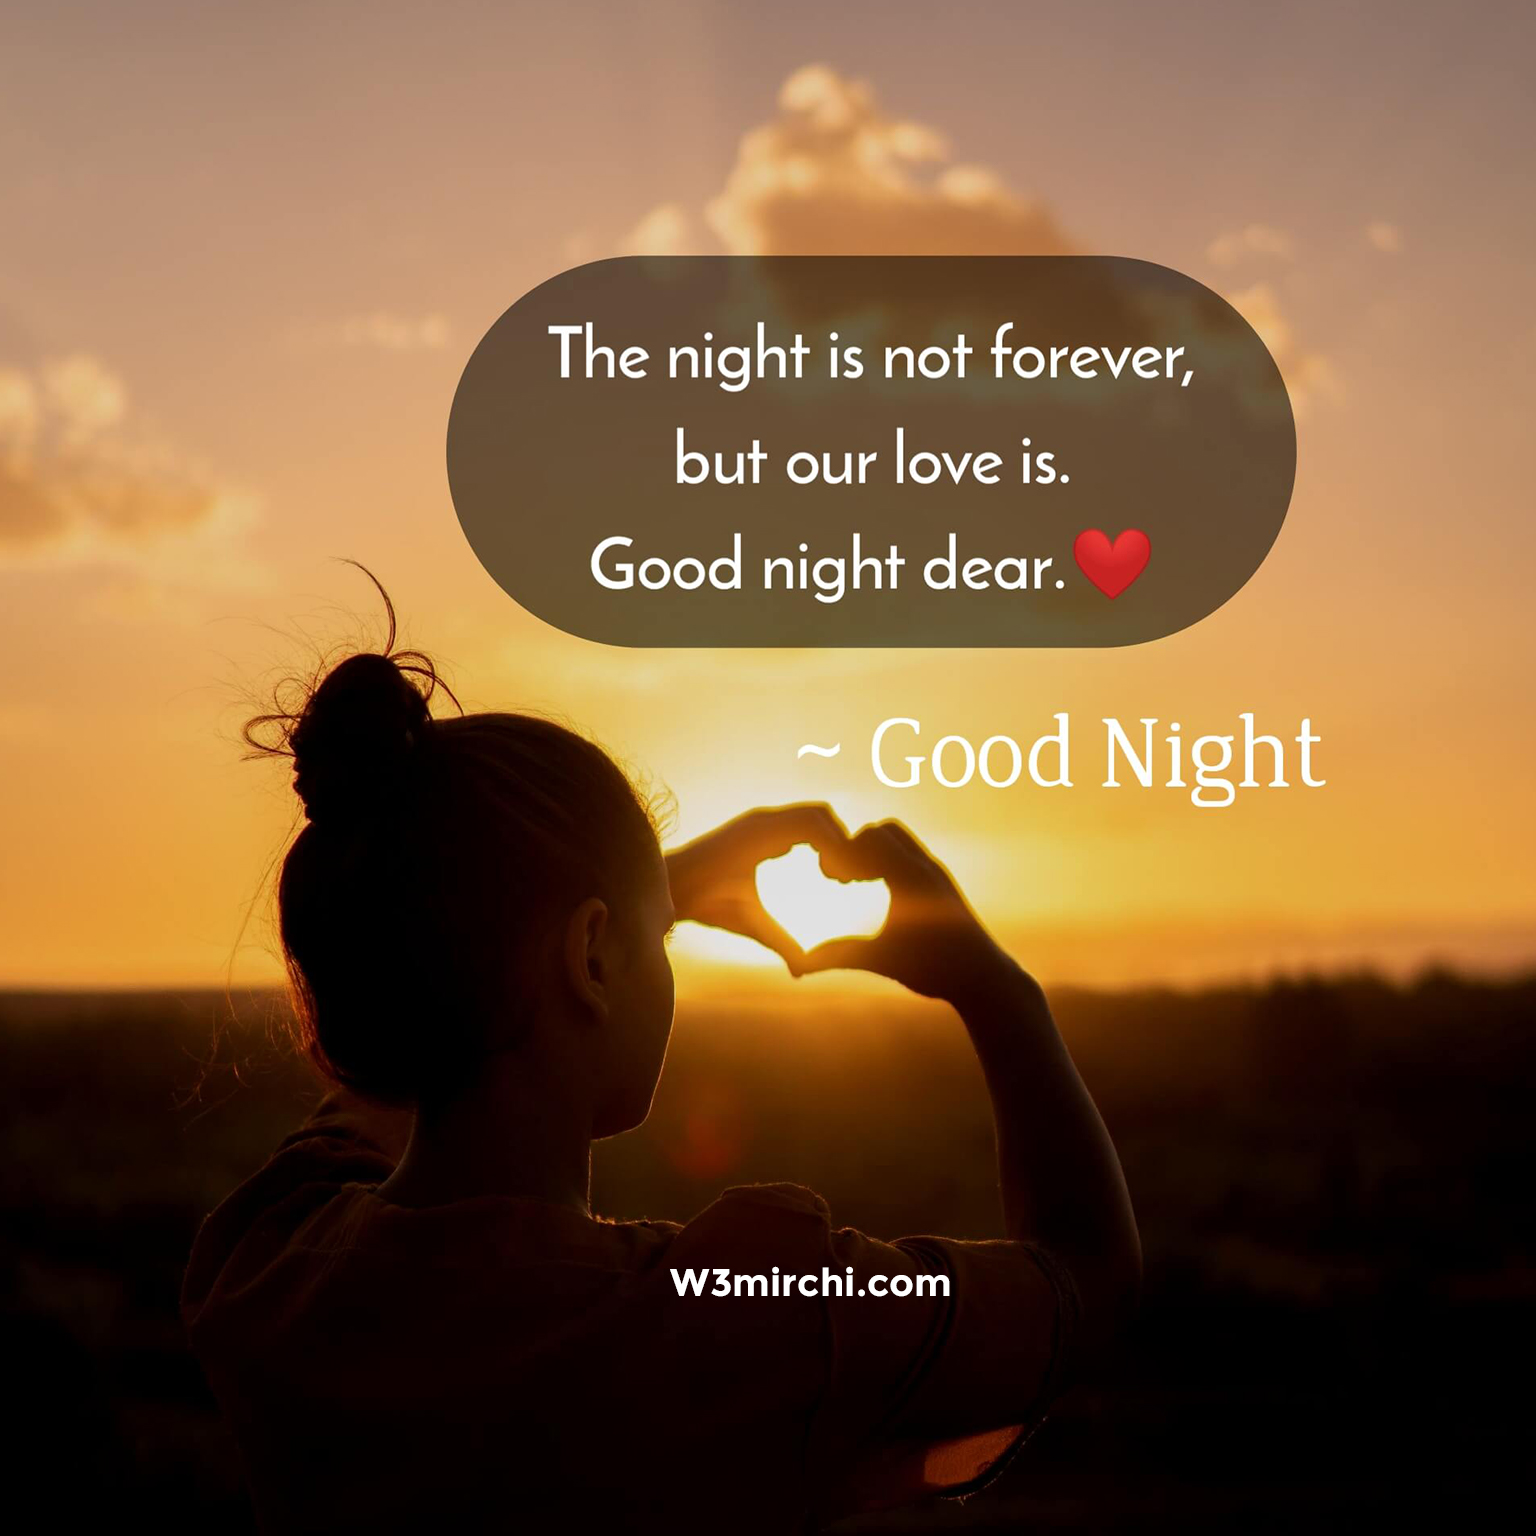 Good night dear.❤